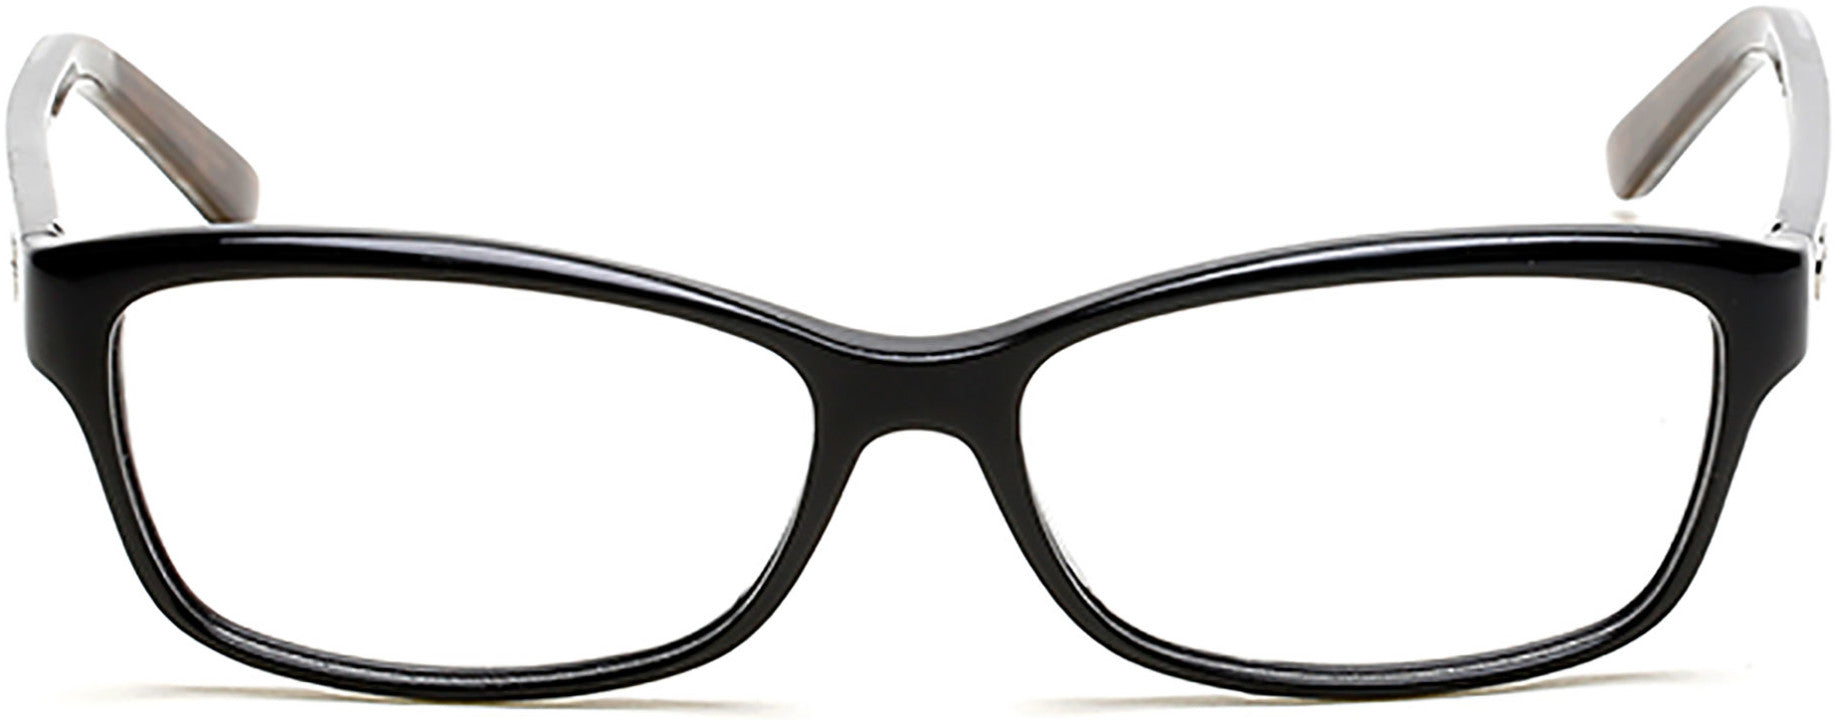 Guess GU2542 Rectangular Eyeglasses 001-001 - Shiny Black